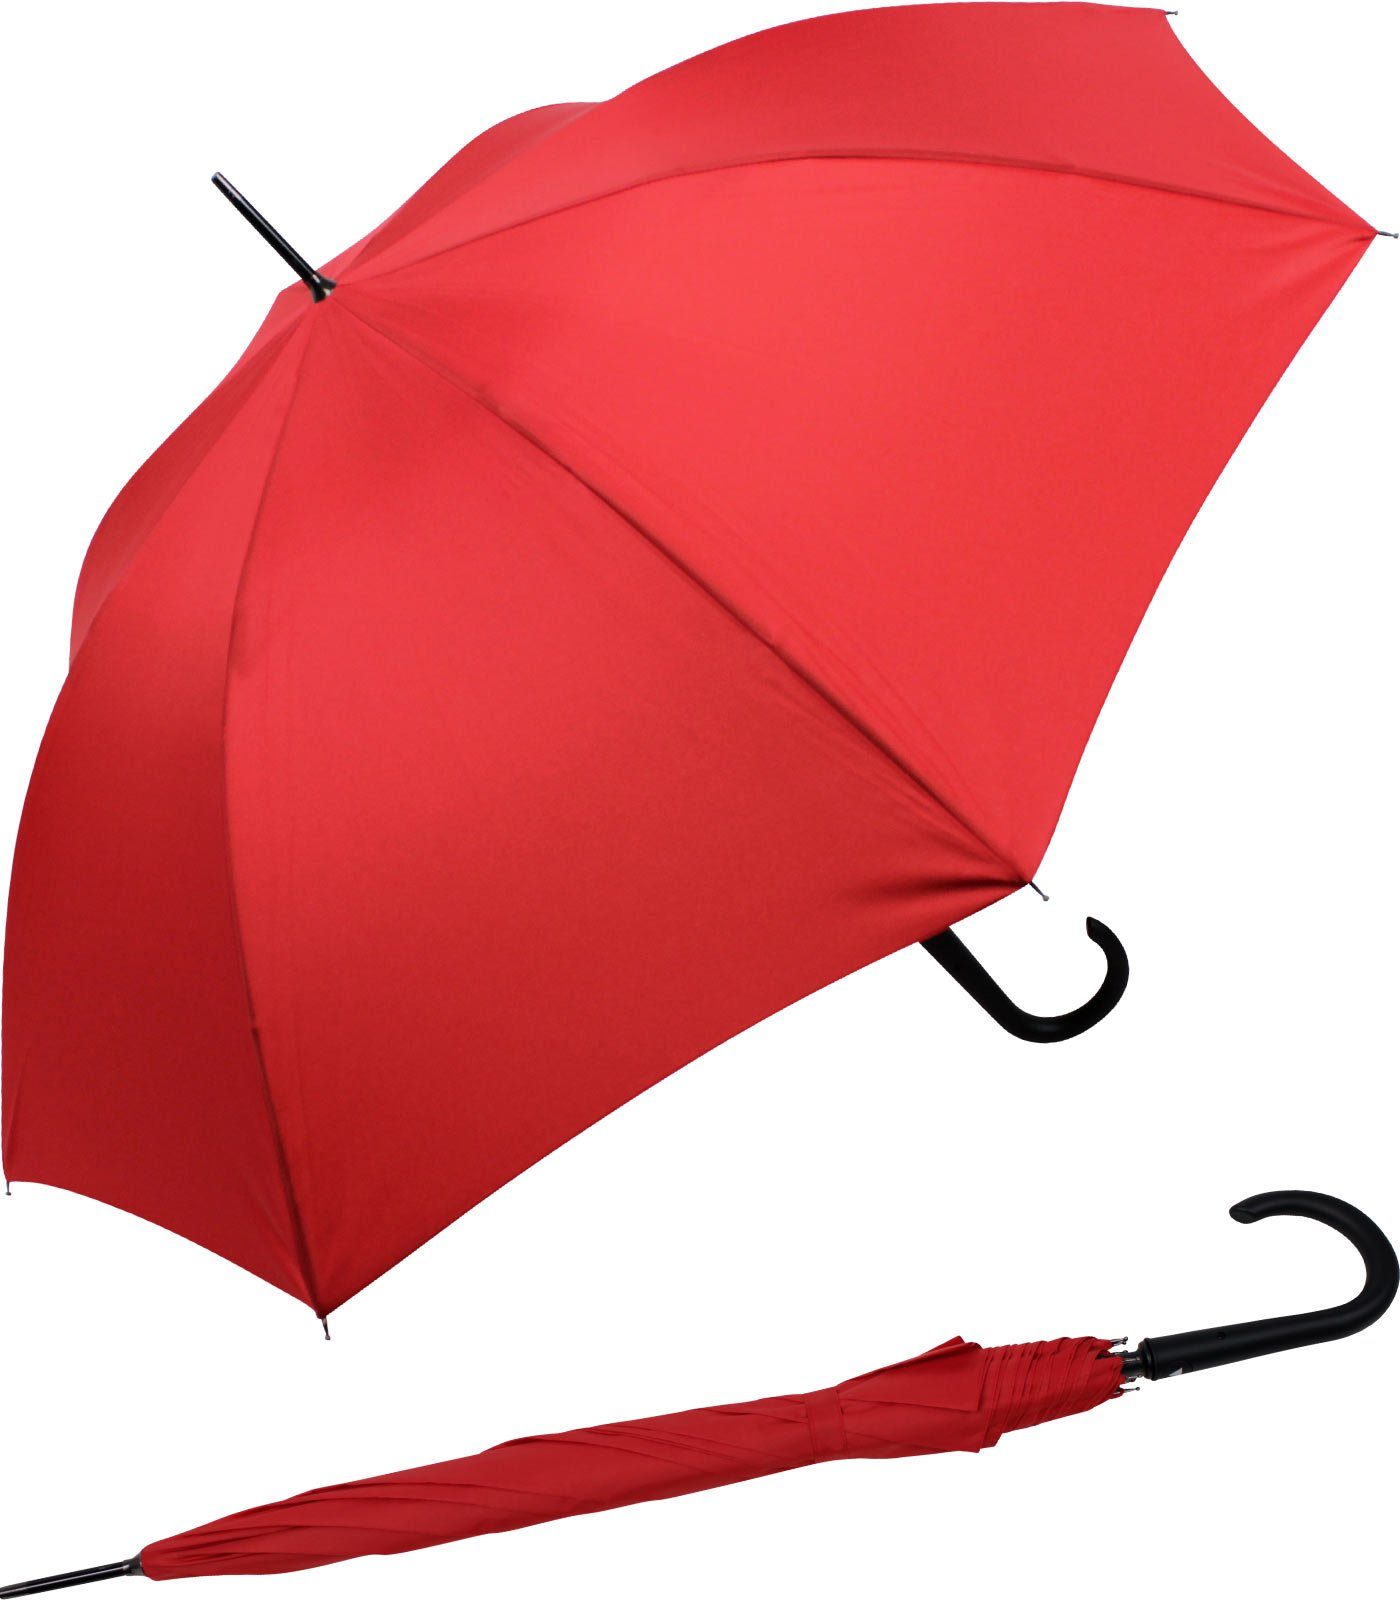 mit Regenschirm großer Langregenschirm RS-Versand rot Auslöseknopf Stahl-Fiberglas-Gestell, Auf-Automatik, stabiler integrierter